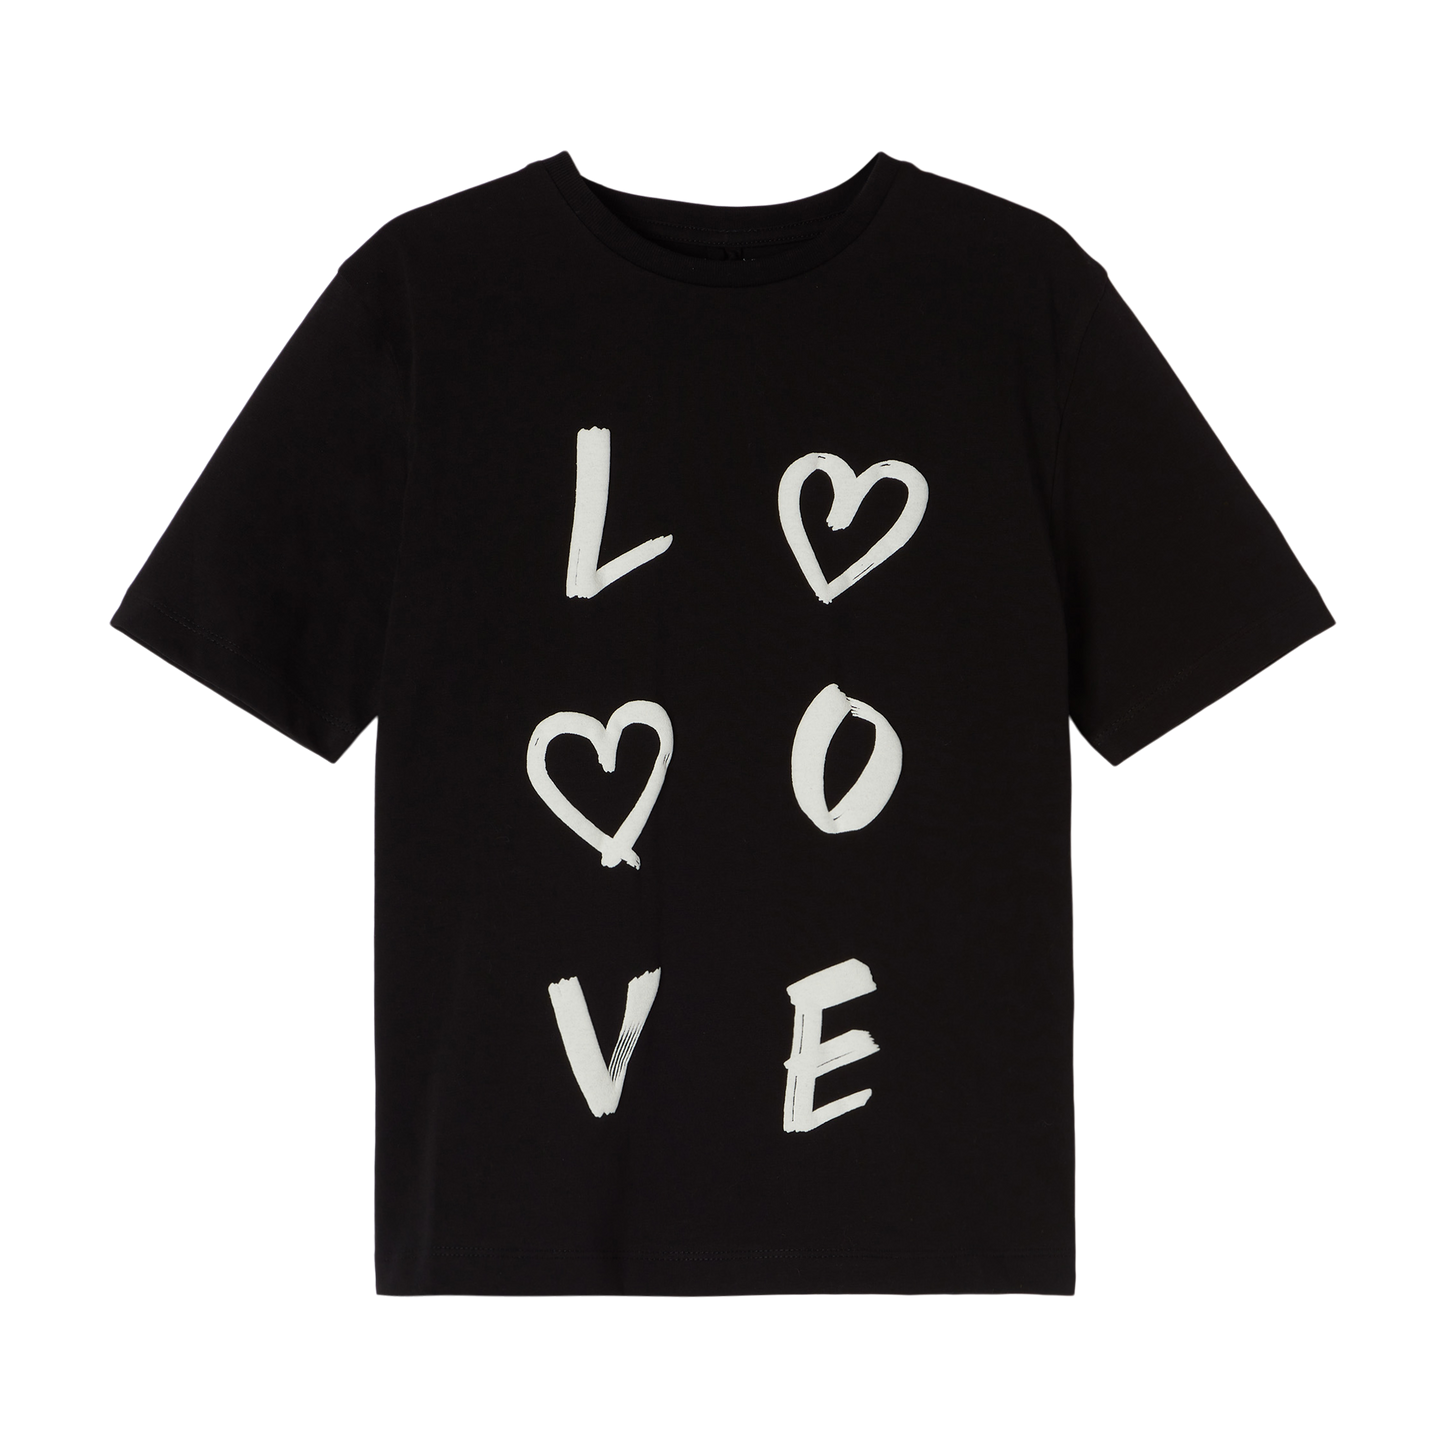 Stella McCartney Oversized "LOVE" T-Shirt